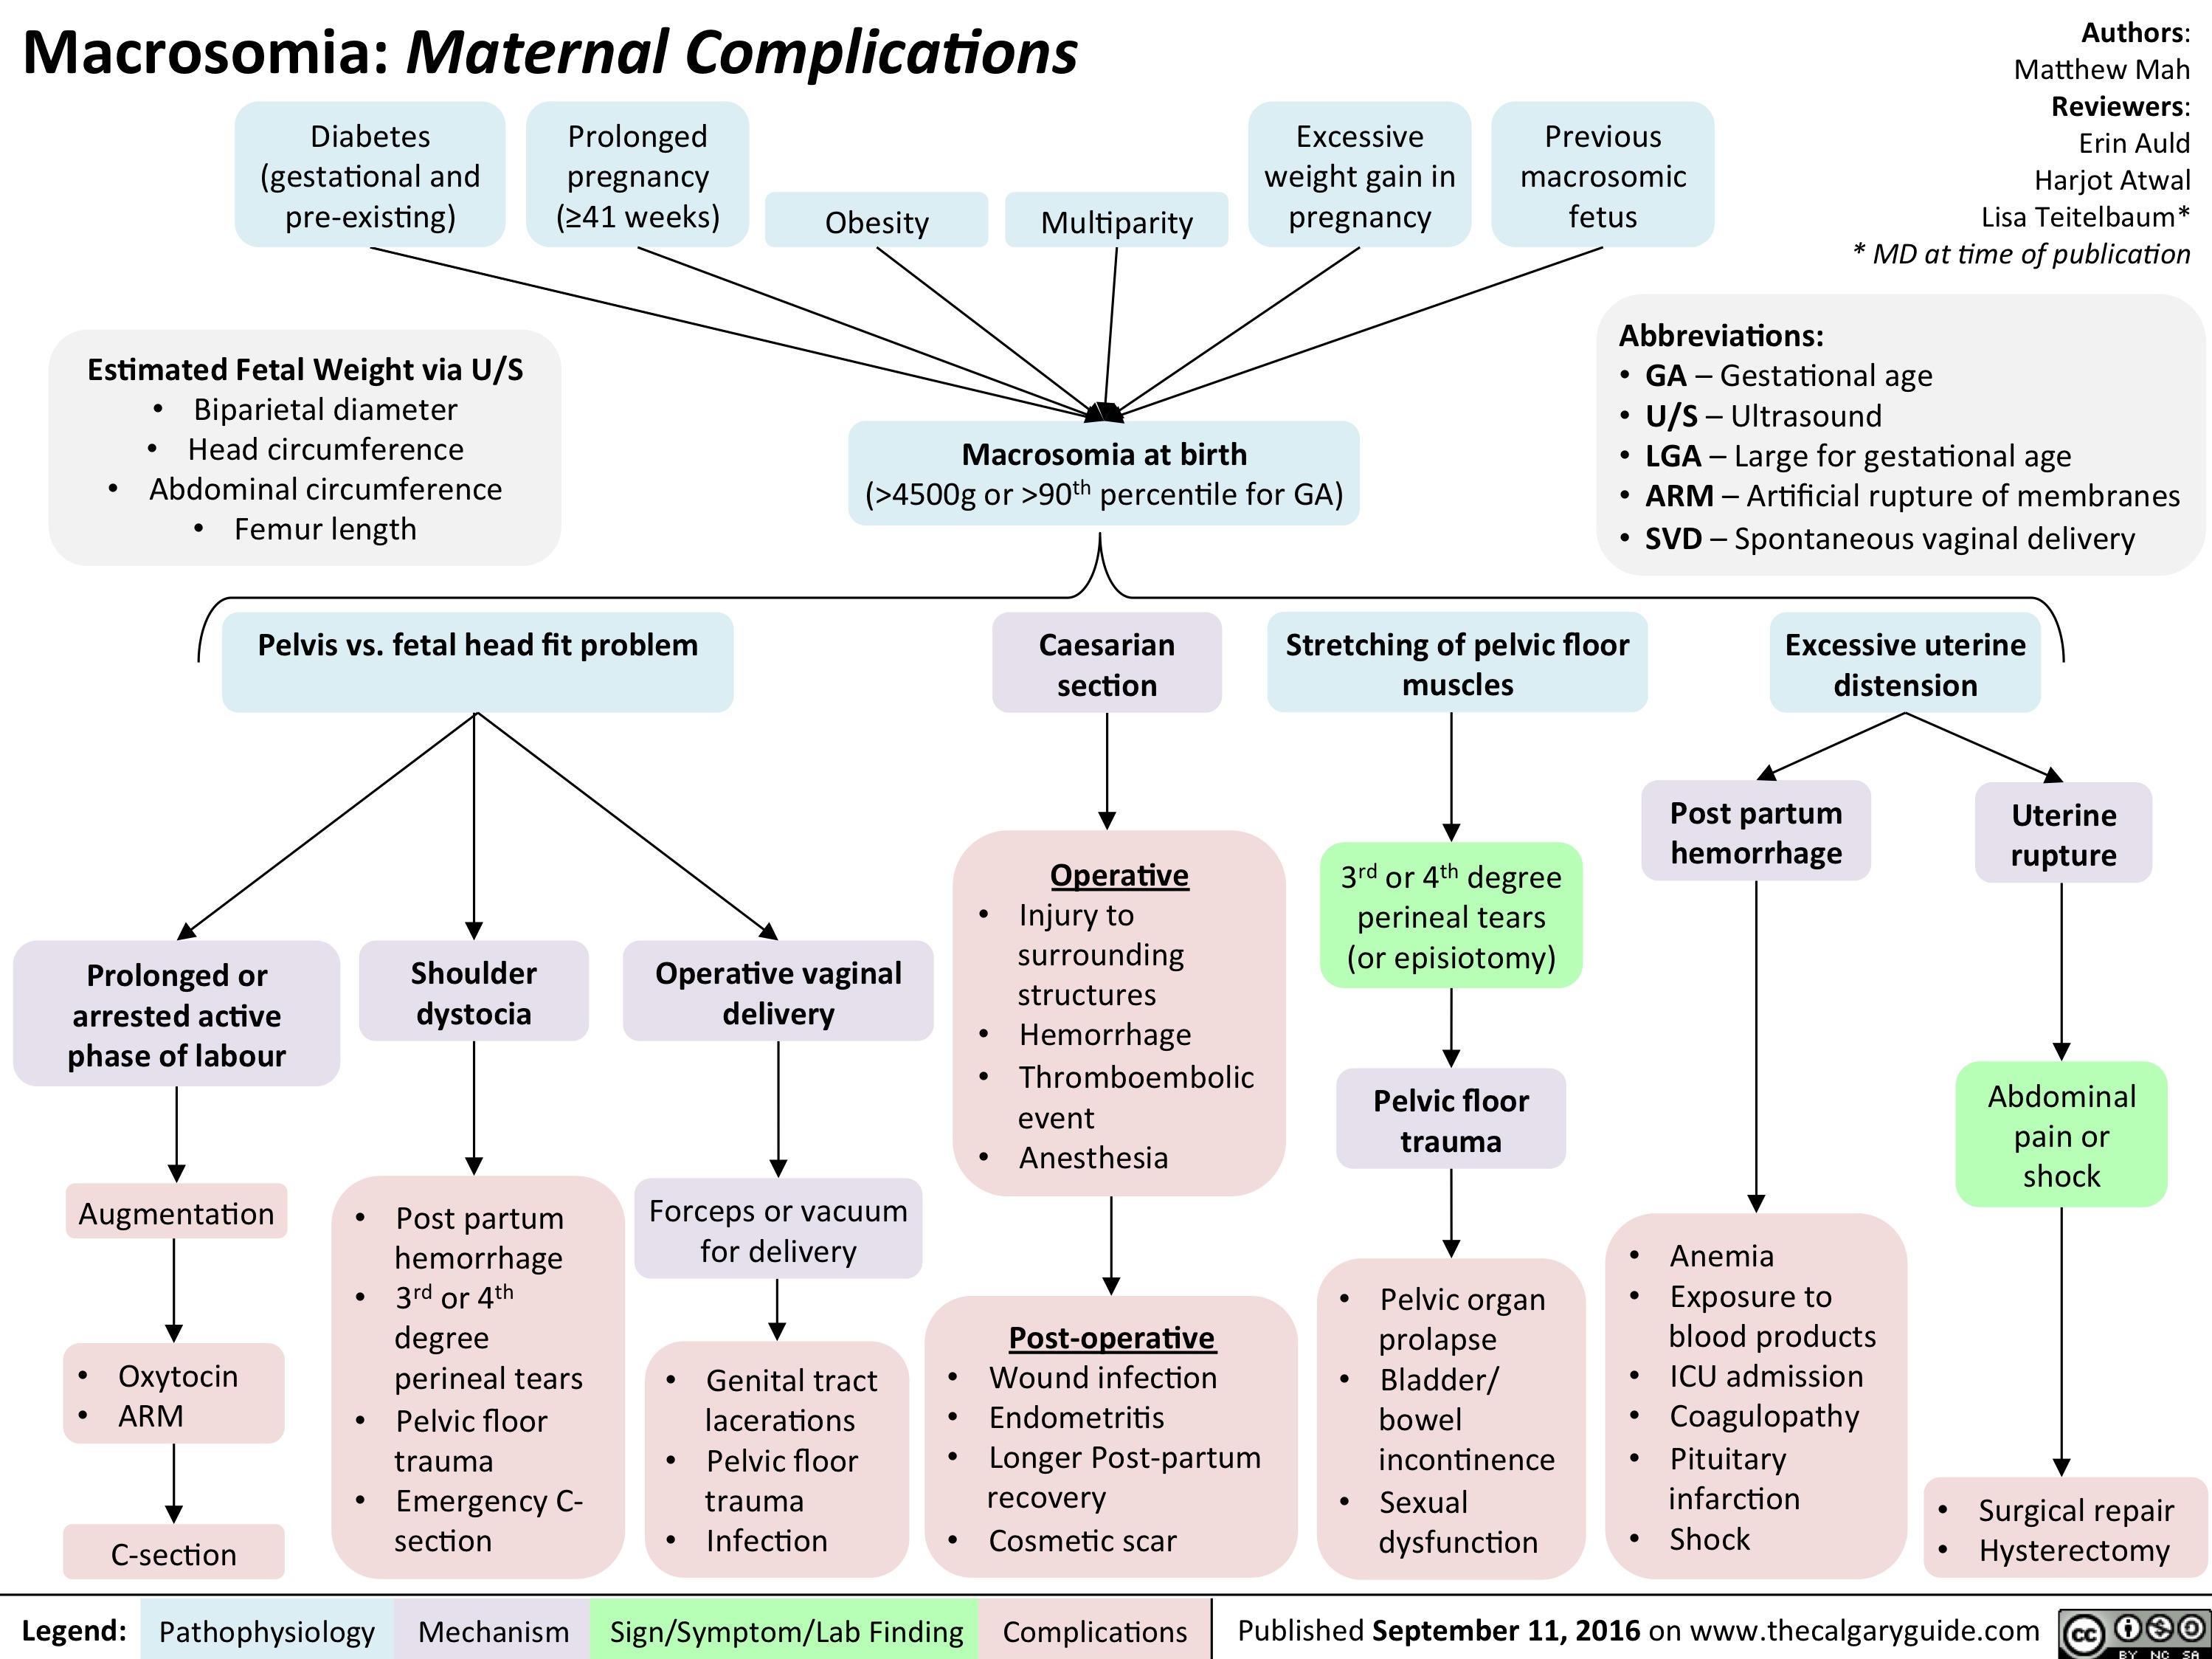 macrosomia-maternal-complications-review